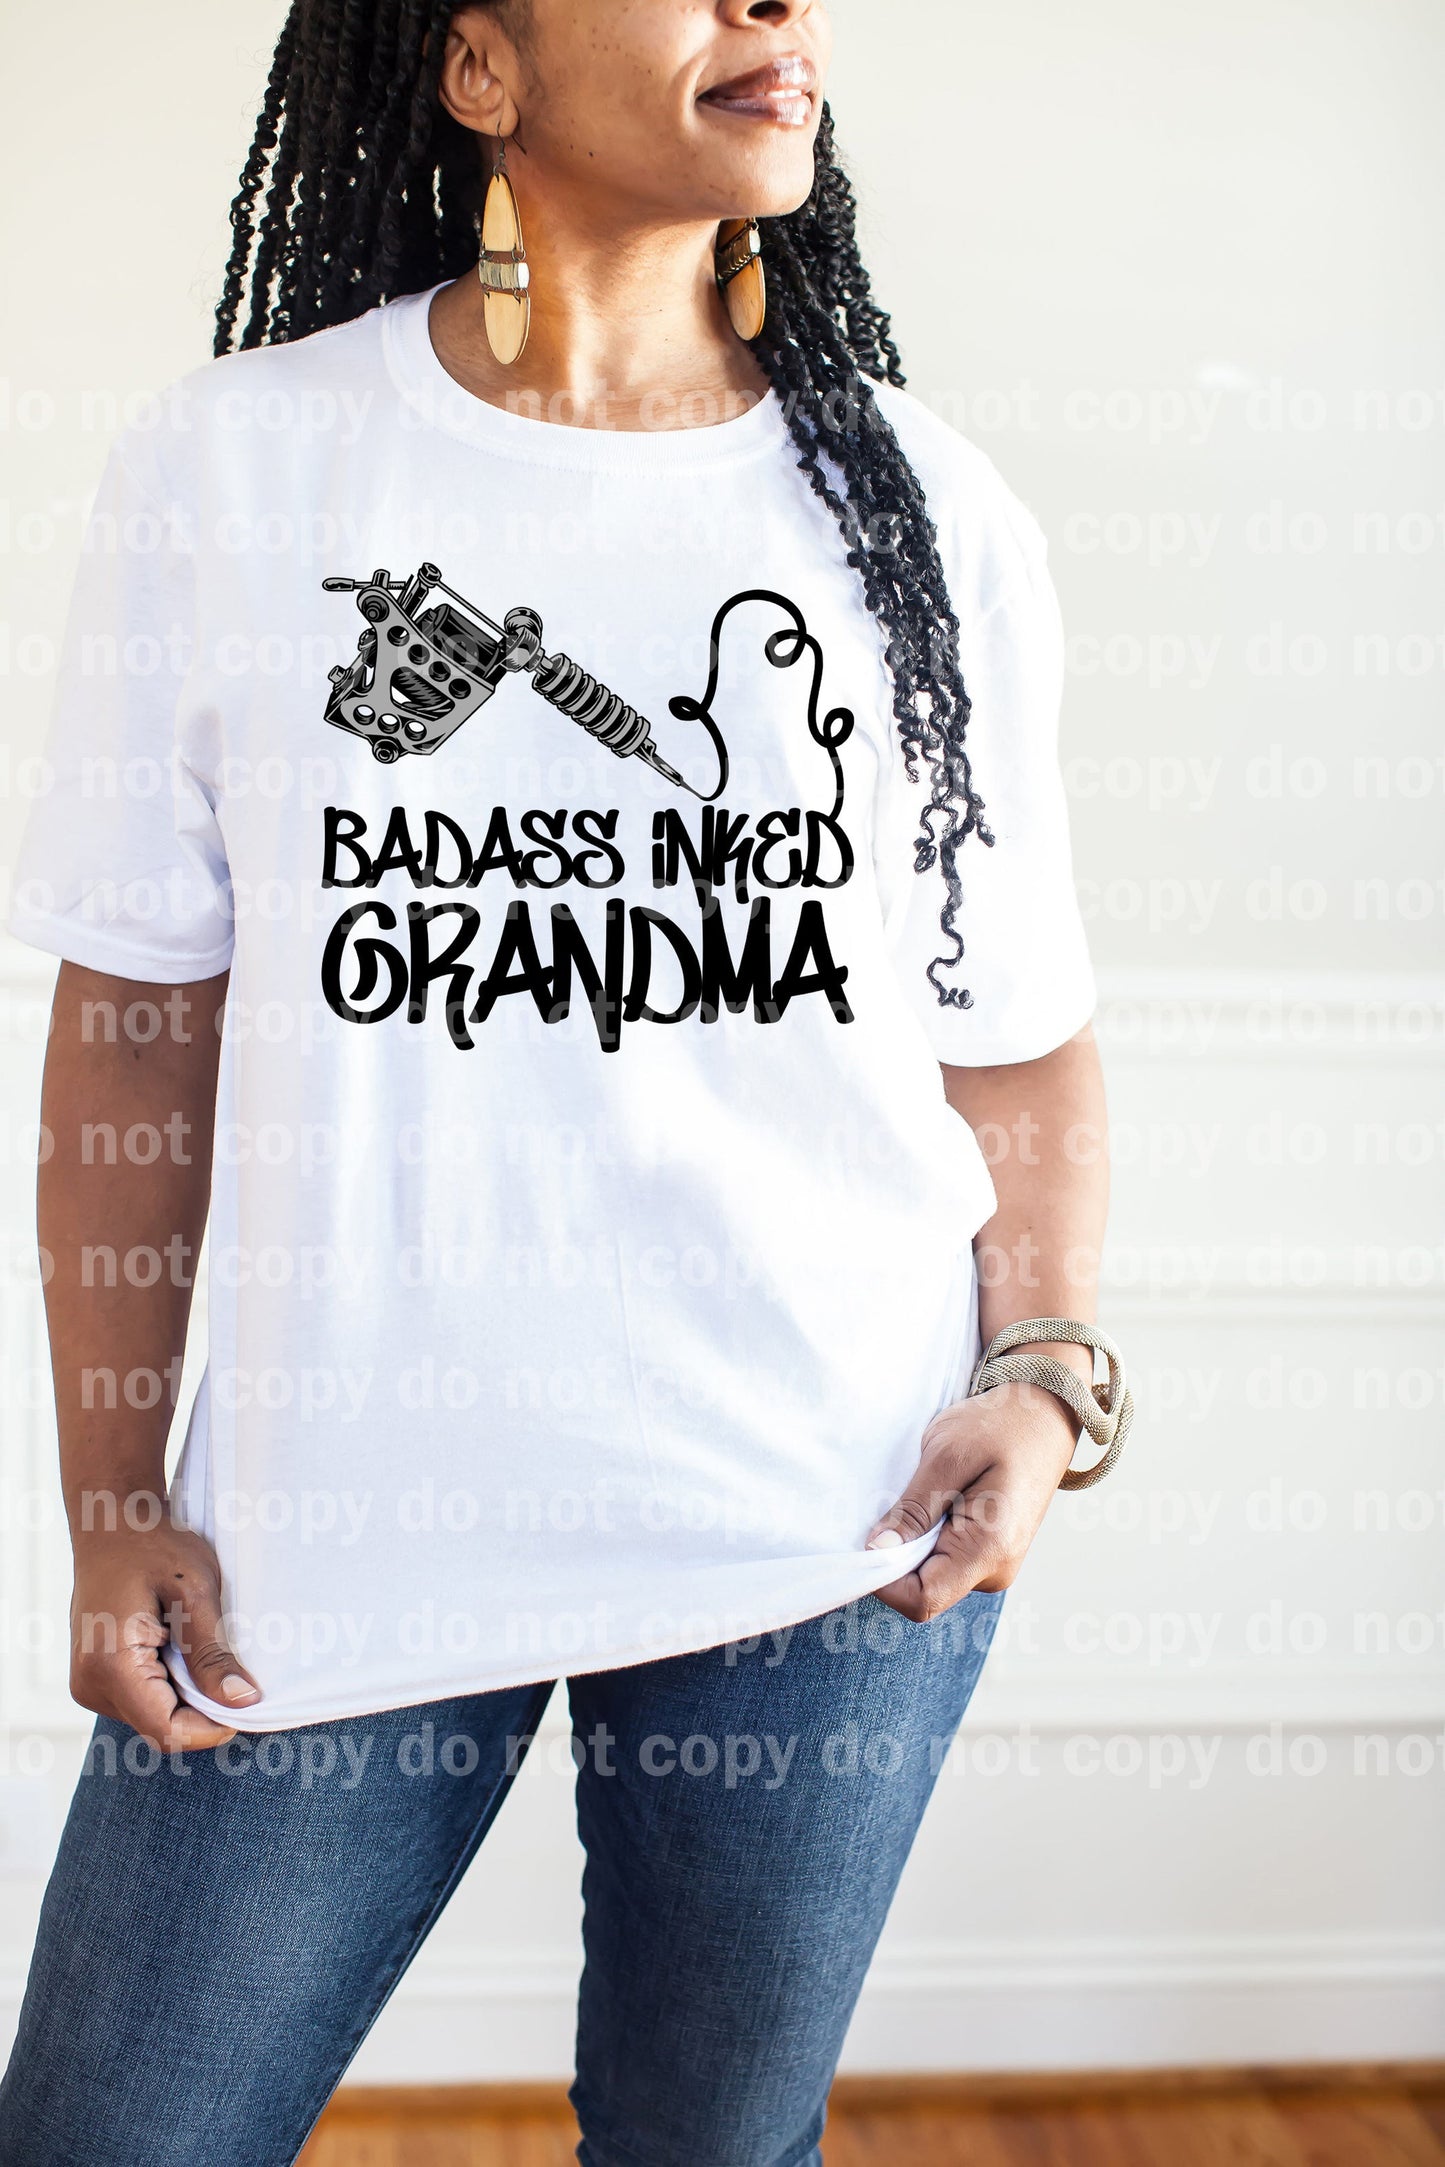 Badass Inked Grandma